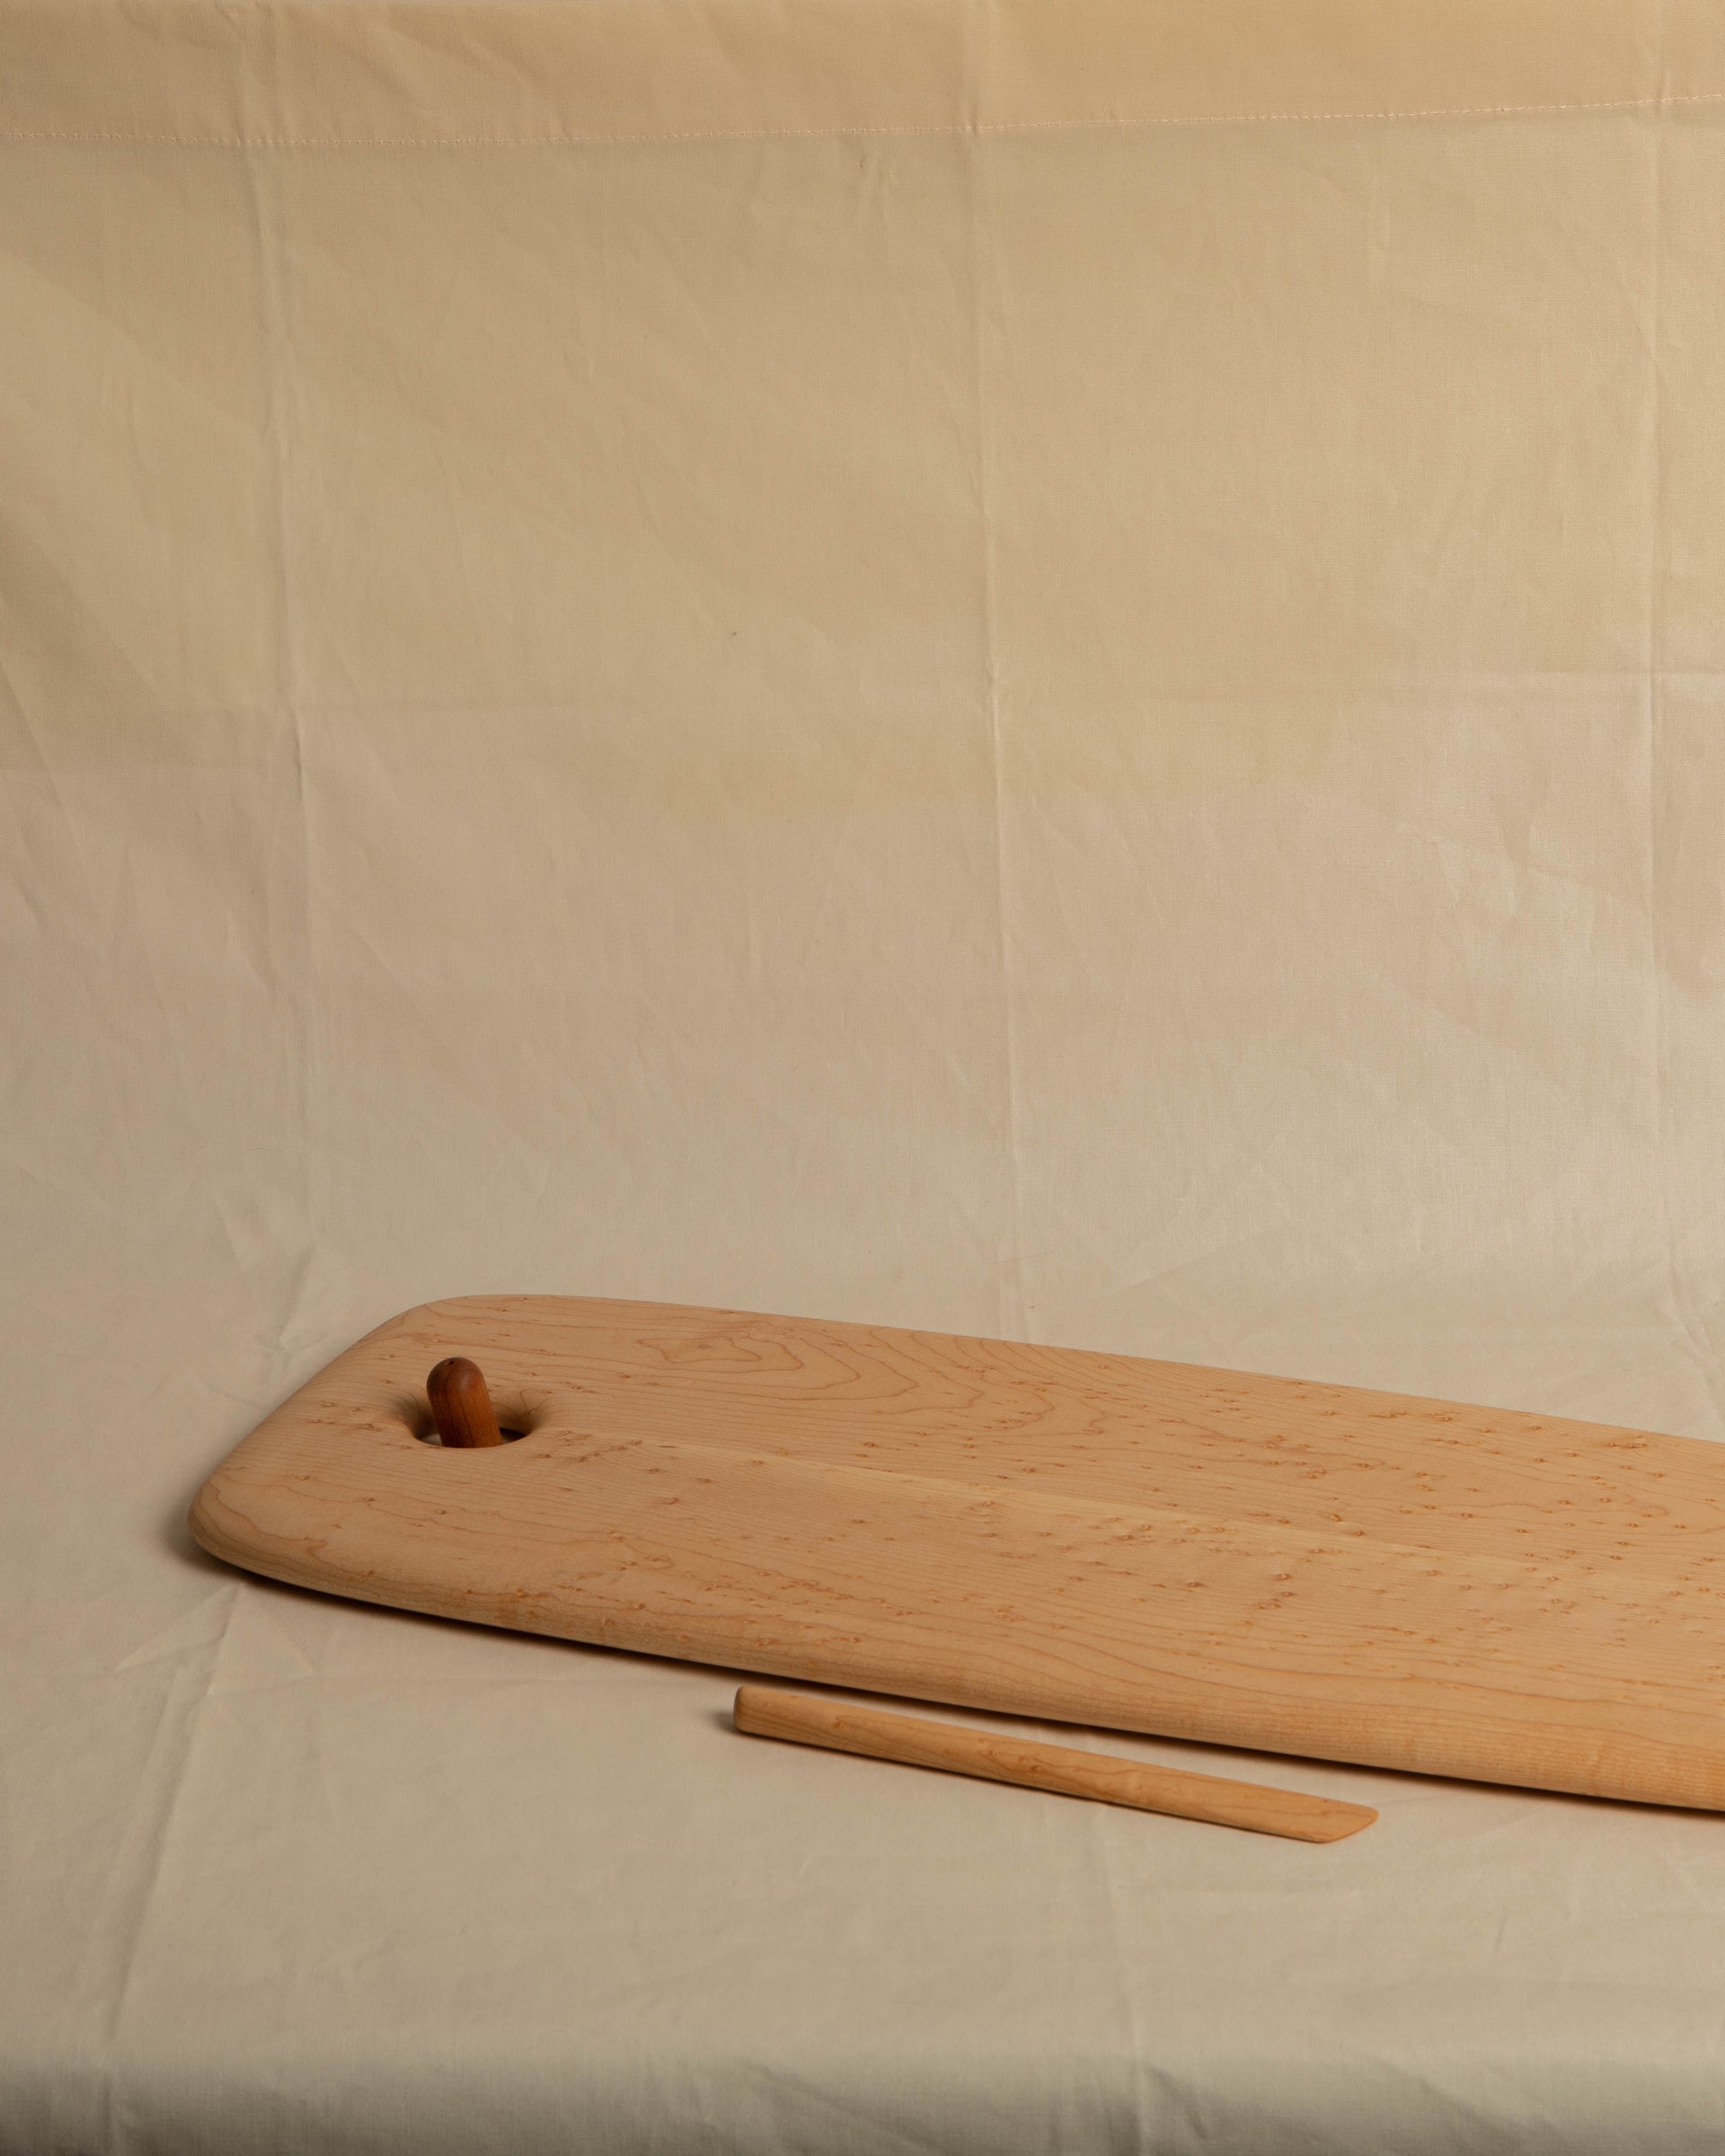 Cutting Board, Thin Rectangle #3 by Edward Wohl